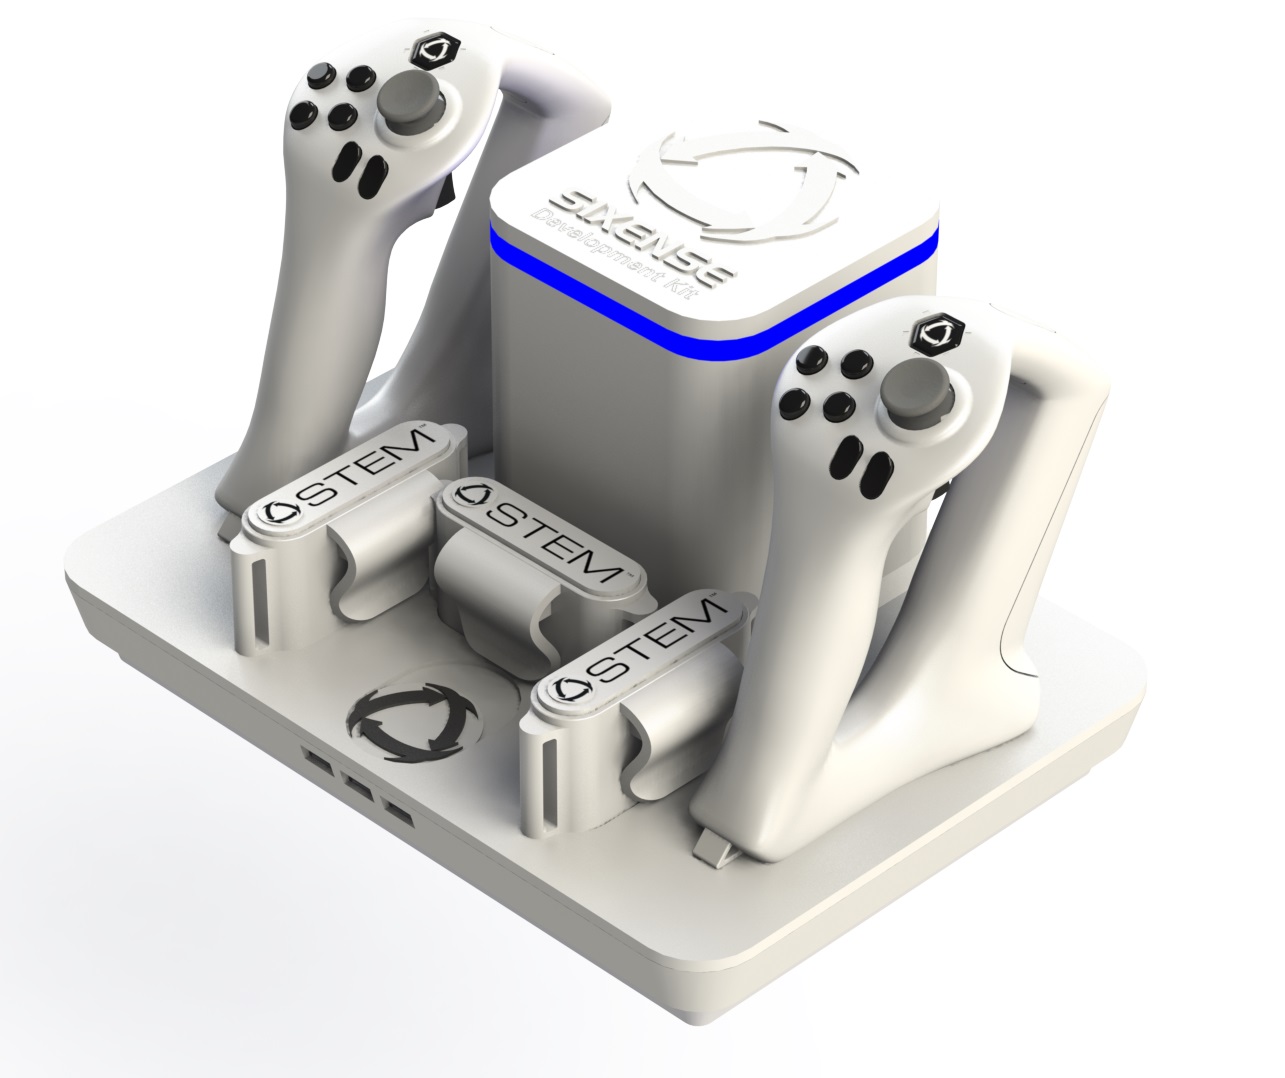 STEM VR Motion Controller Kickstarter -- Starting at $149